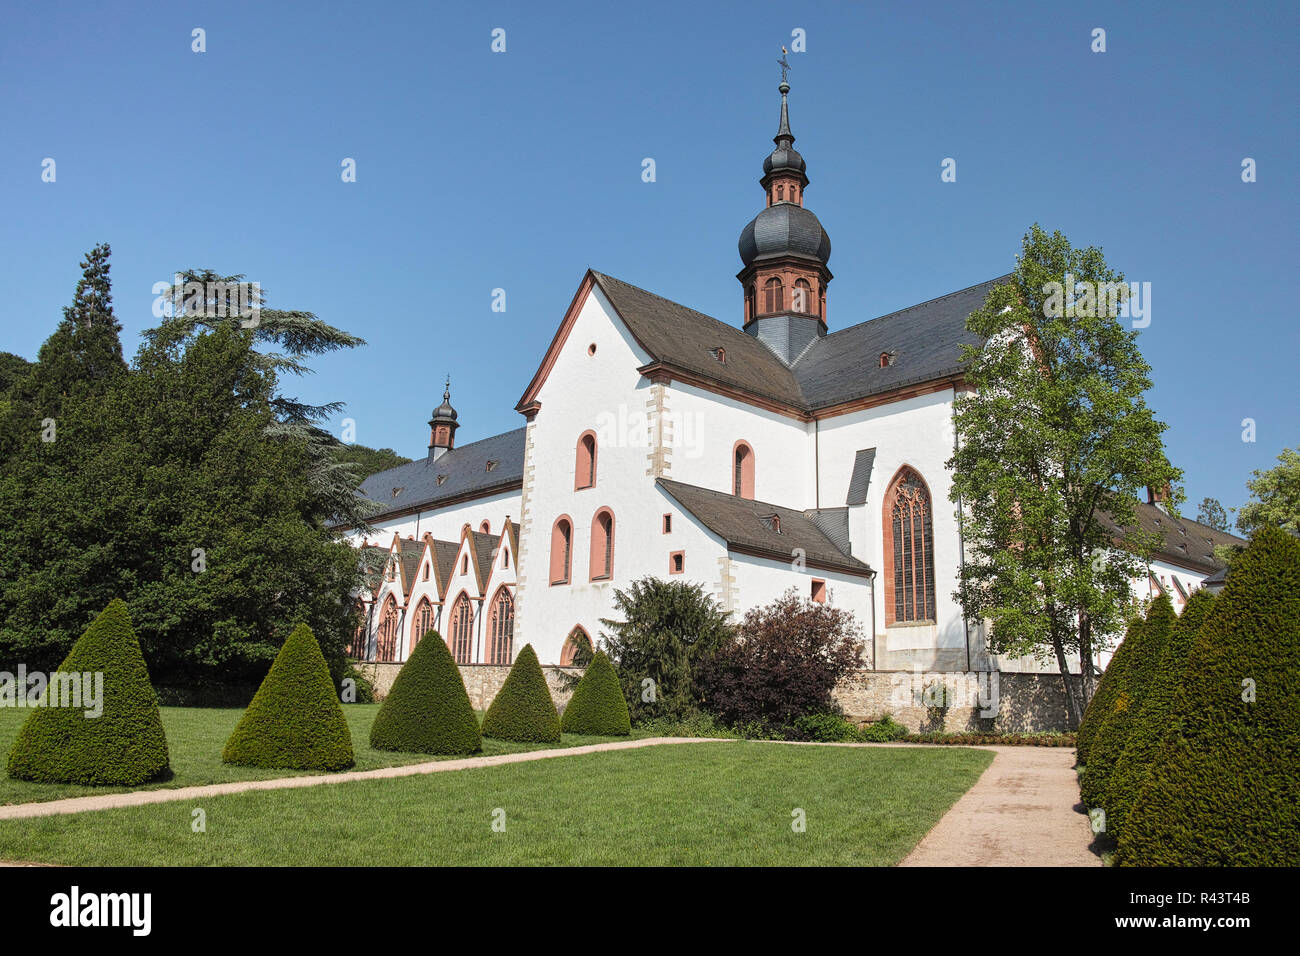 Monastery Eberbach, Rheingau Germany Stock Photo